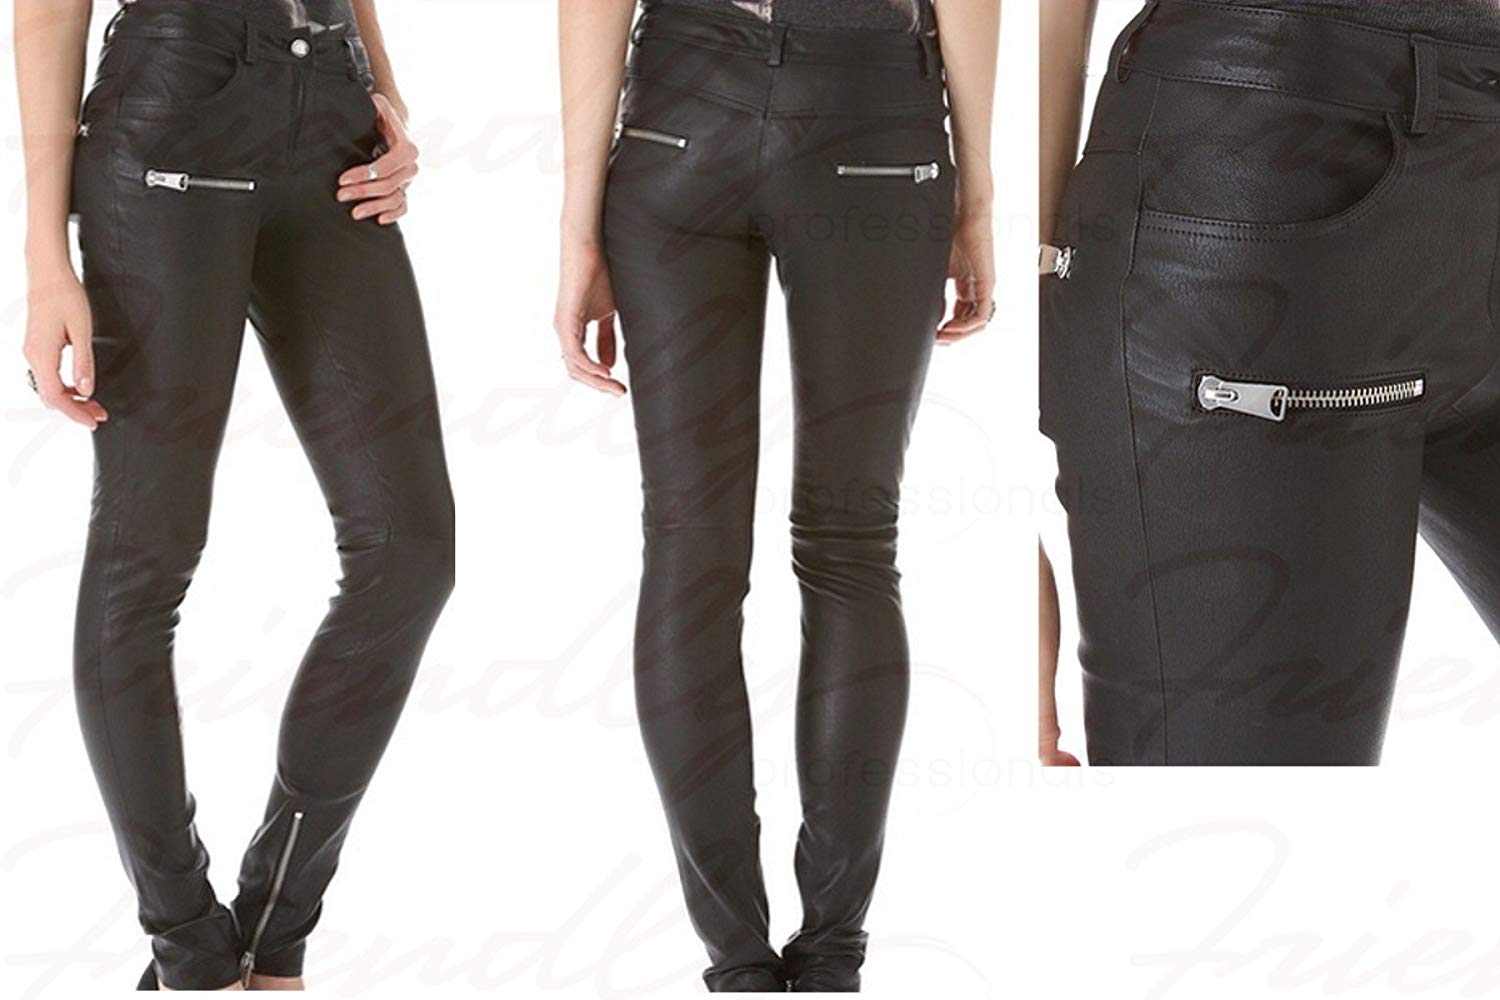 Leather pants for women amazon.com : leather pants for women girls teens genuine leather pants hot  design RHYZFTV